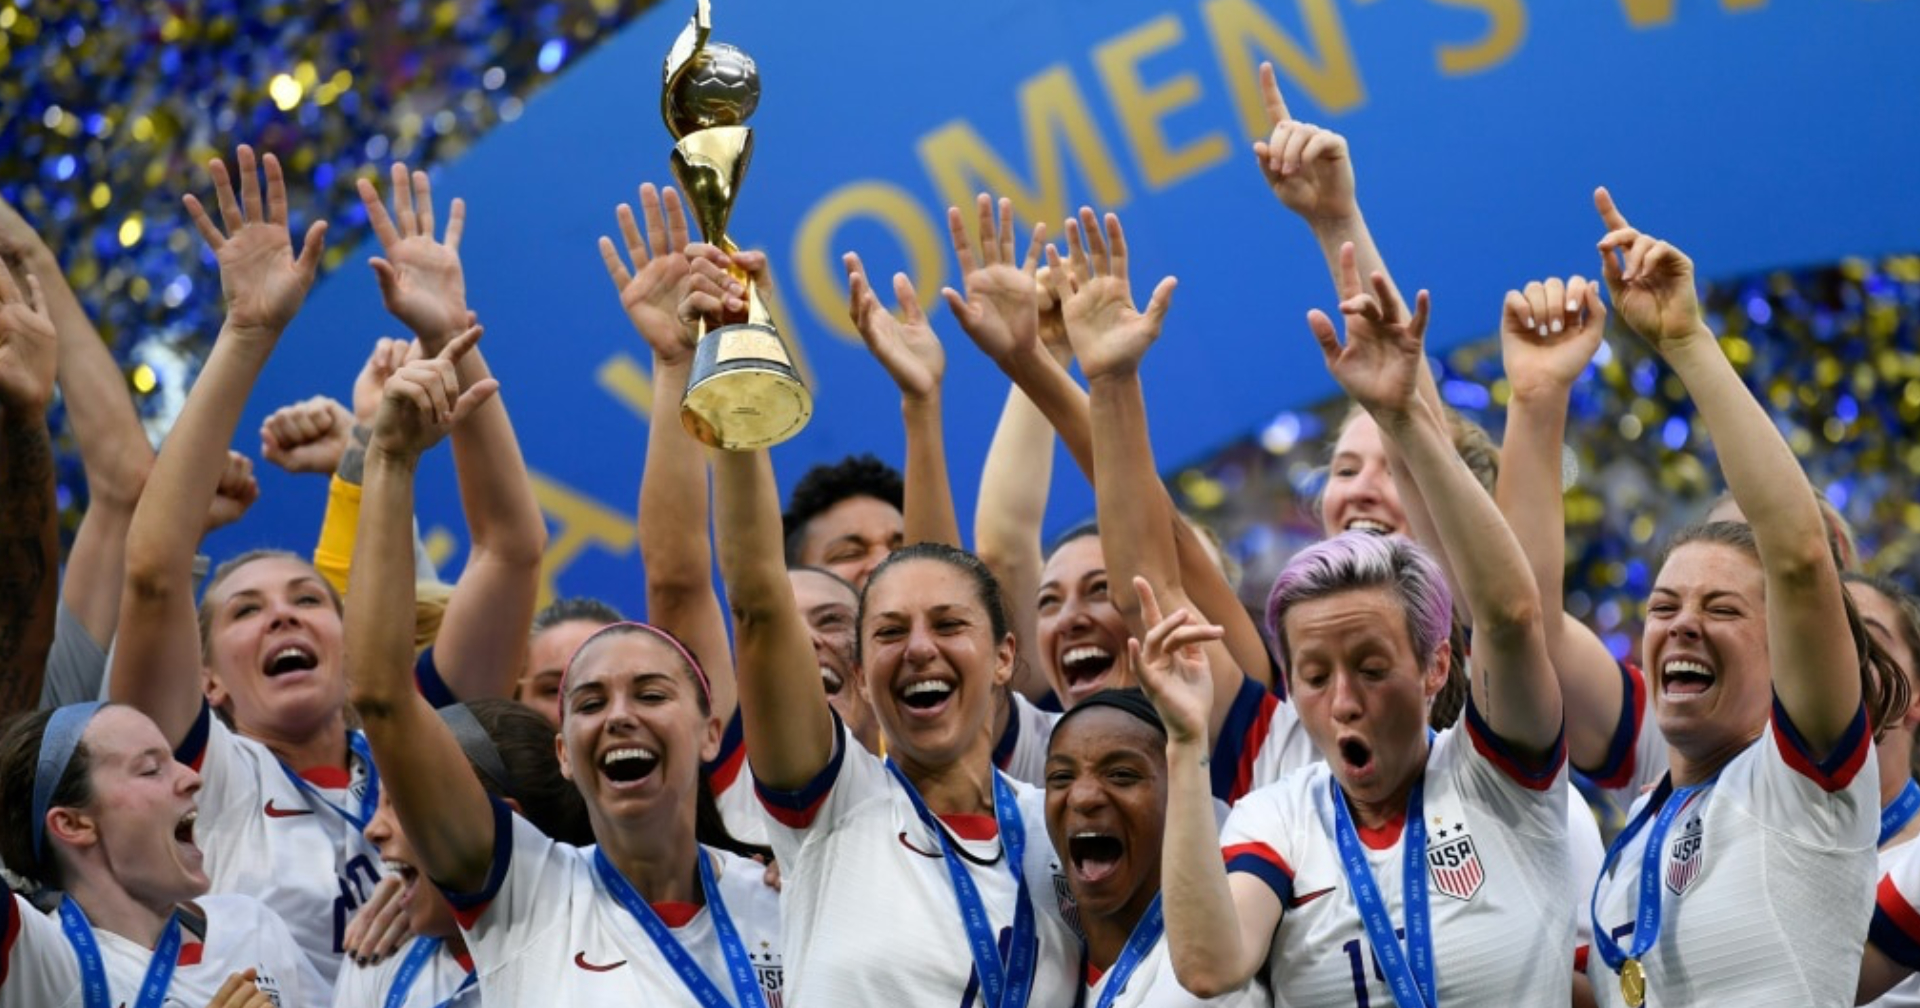 FIFA เพิ่มเงินรางวัล “ฟุตบอลโลกหญิง” 2023 เป็น 110 ล้านดอลลาร์ มากกว่าปี 2019 ถึงสามเท่า